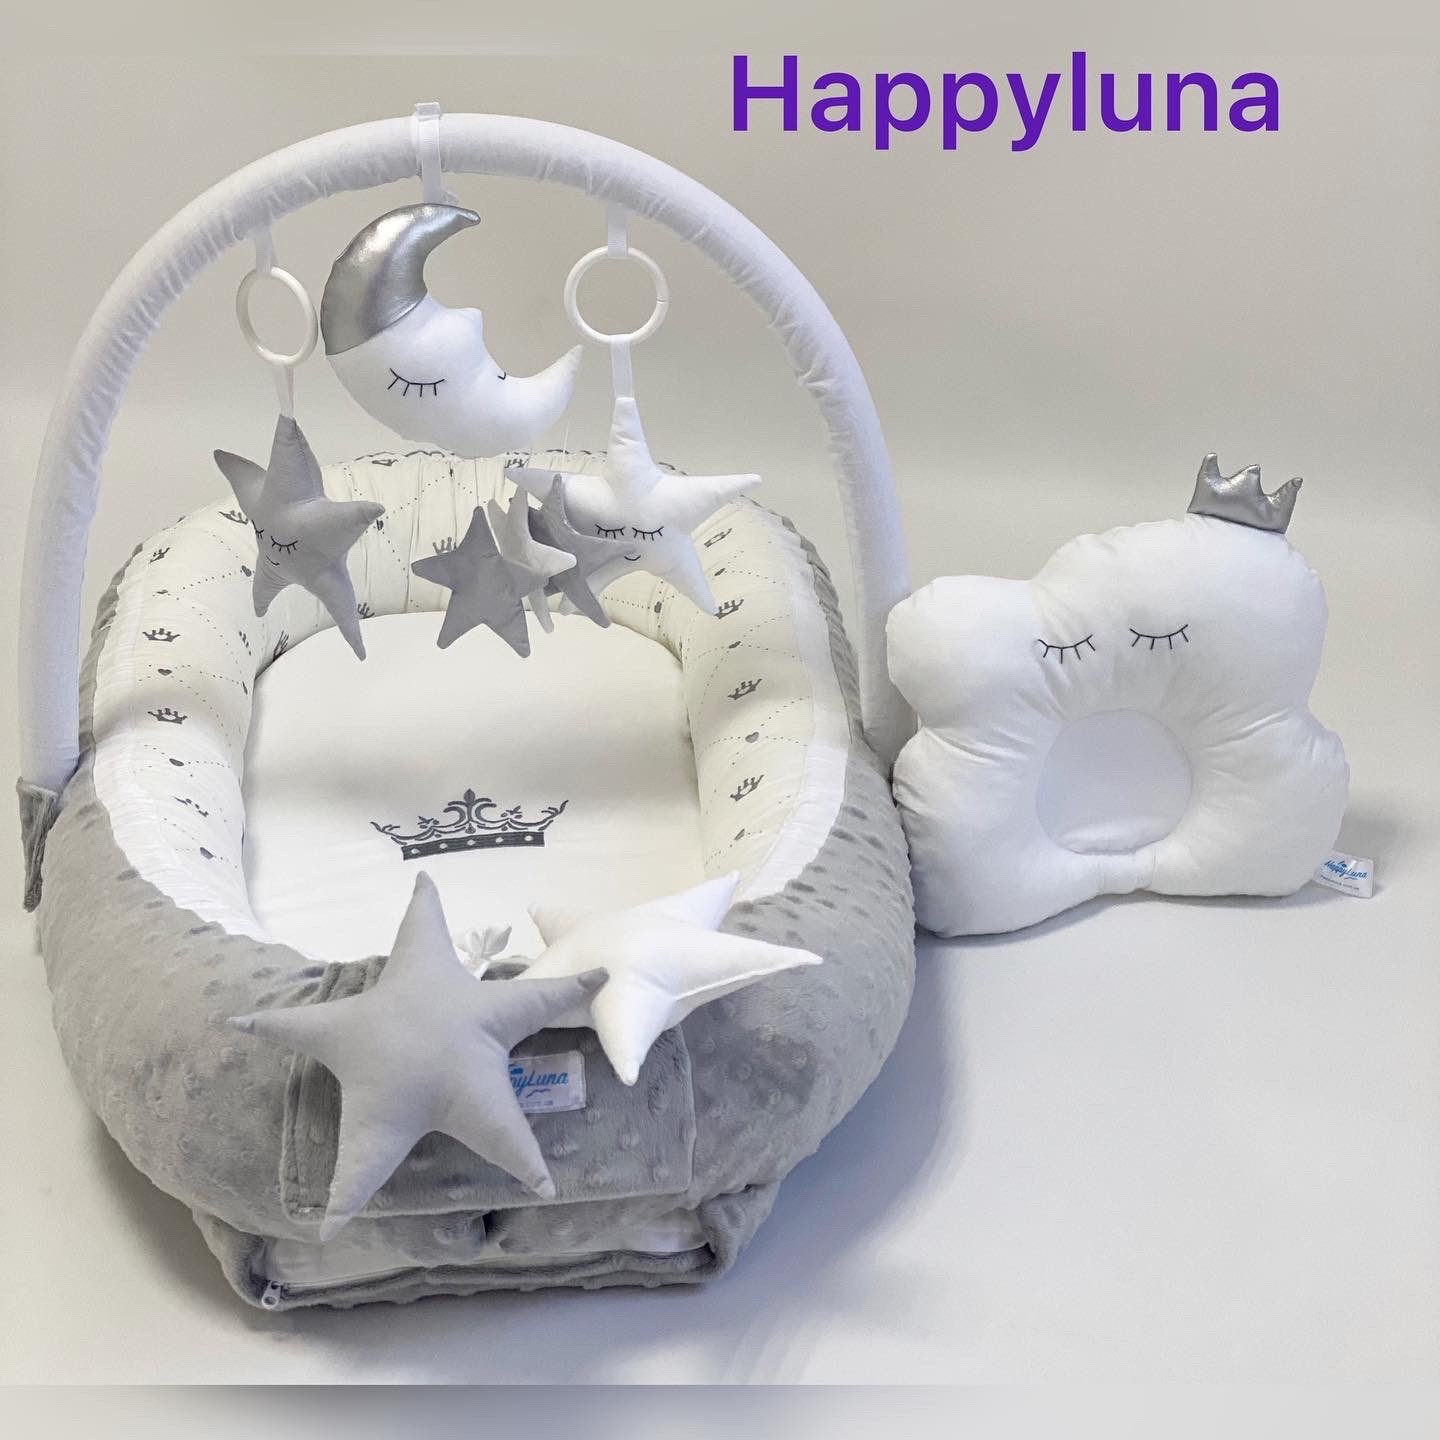 TM Happyluna Babynest for a newborn Premium "Royal"